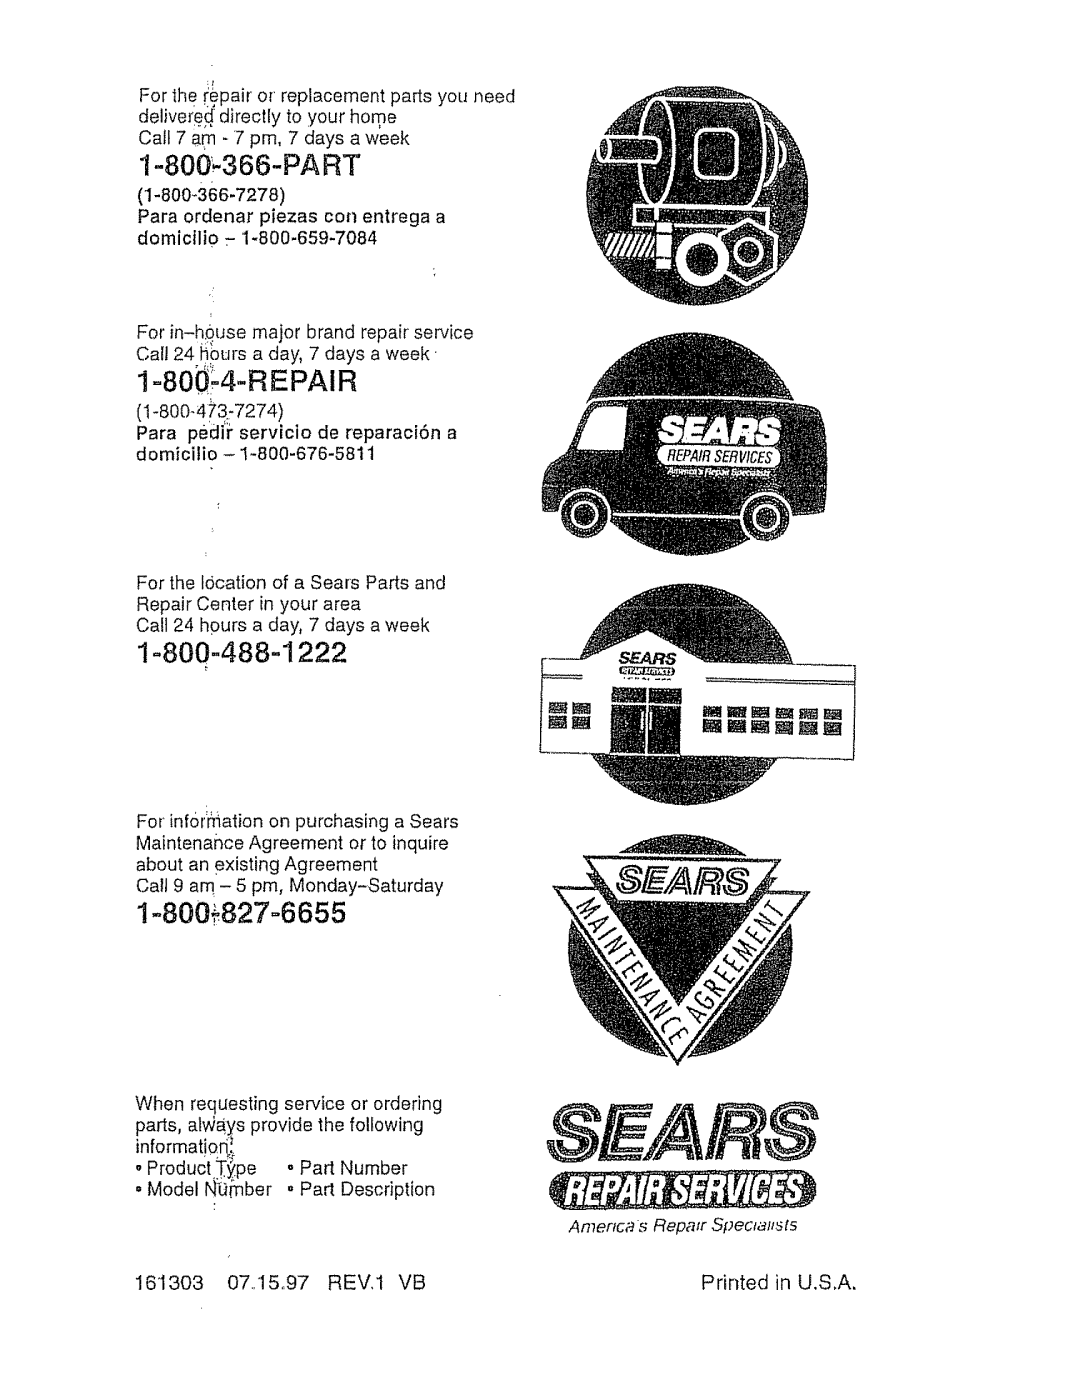 Sears 917.387023 1-800:..366-PART, l o80 ;4..REPAIR, 1-800-488..1222, 1-.800, 161303, 07.,15o97 REV,1 VB, Printed in U,S,A 